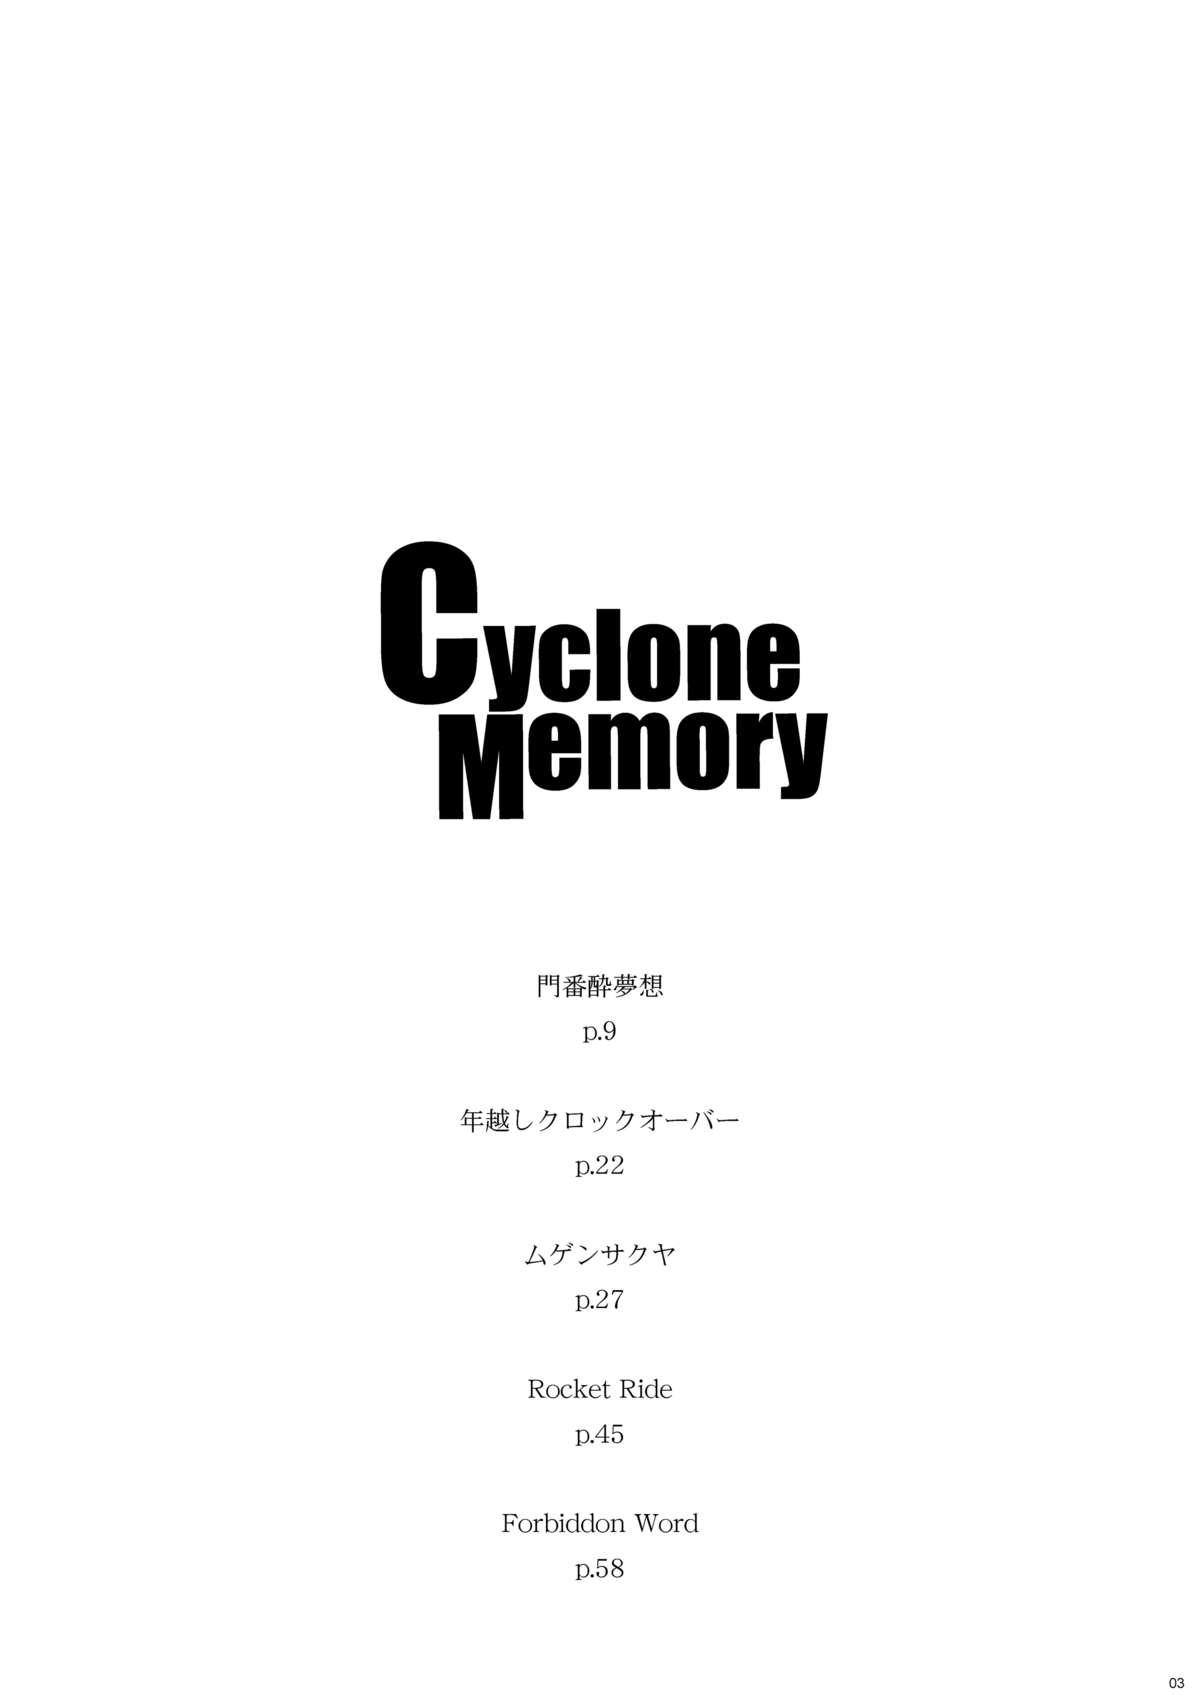 Cyclone Memory 2